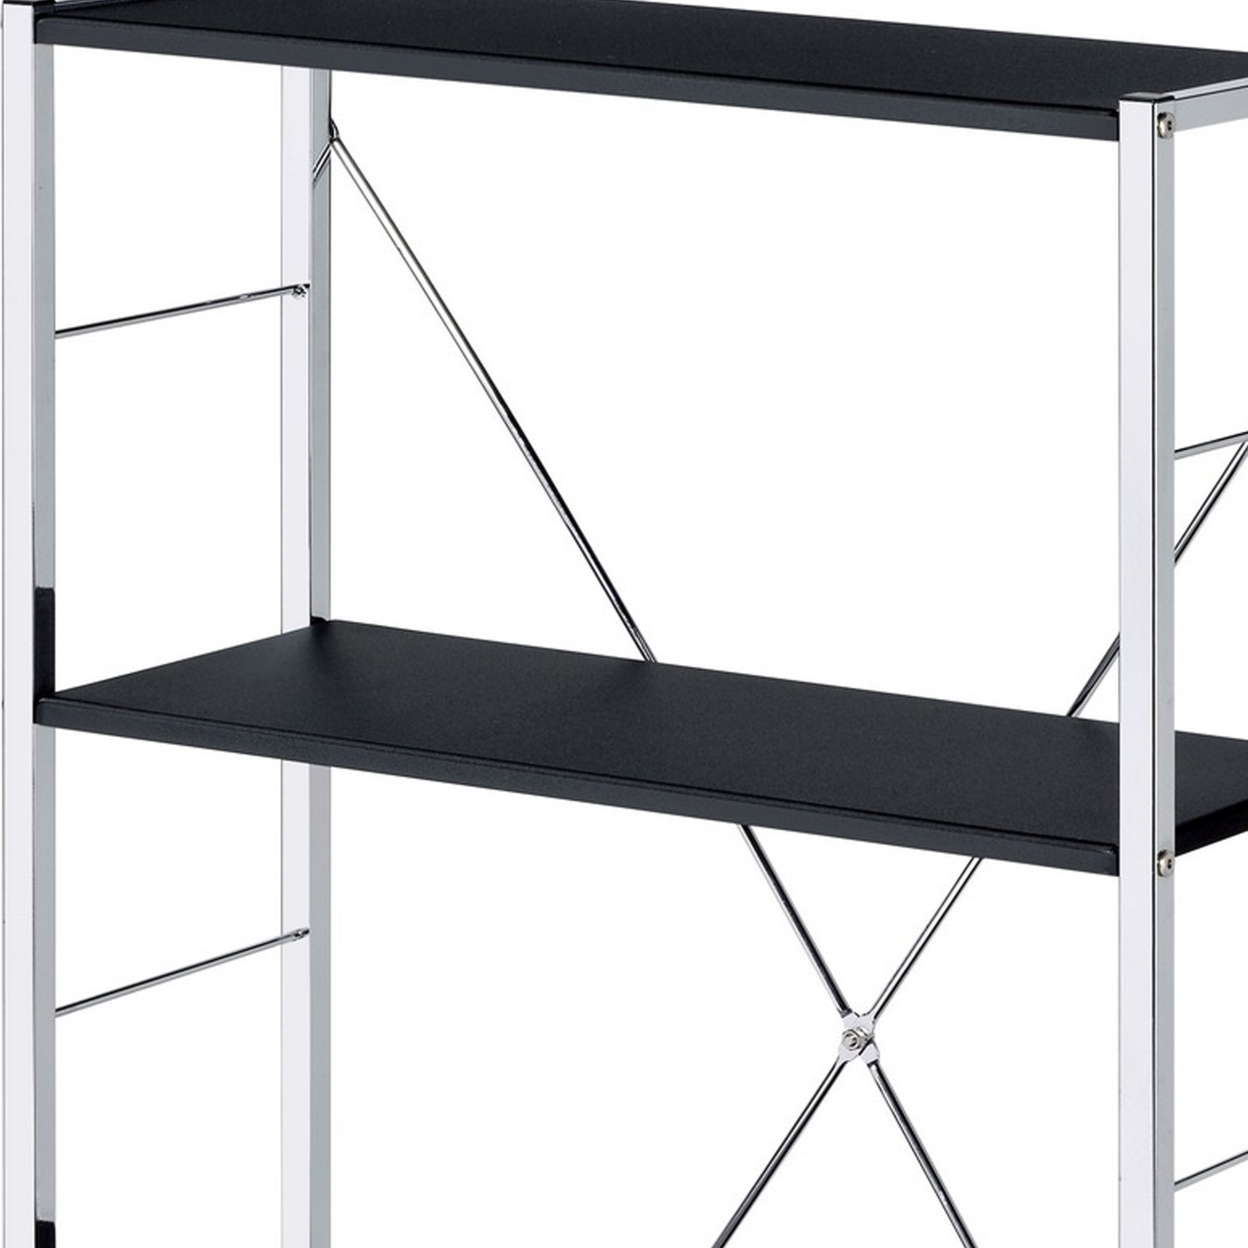 Bookshelf With X Shaped Crossbar Support, Black And White- Saltoro Sherpi